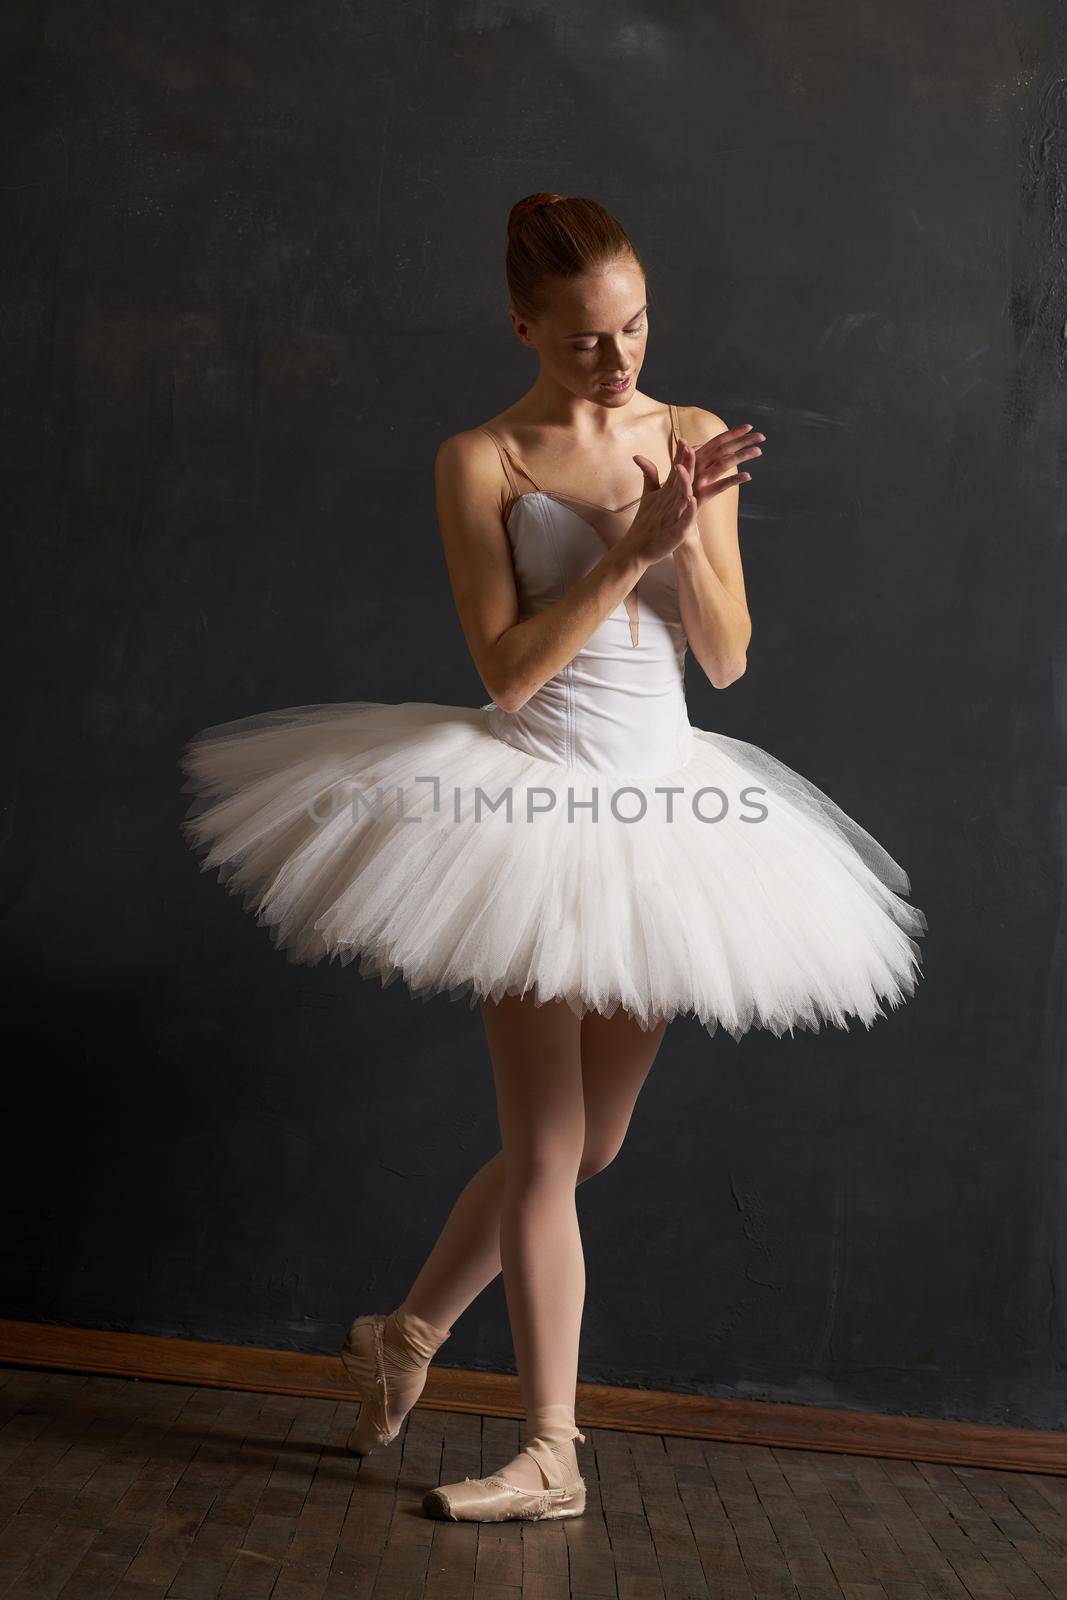 woman ballerina in white tutu performance grace dance by Vichizh